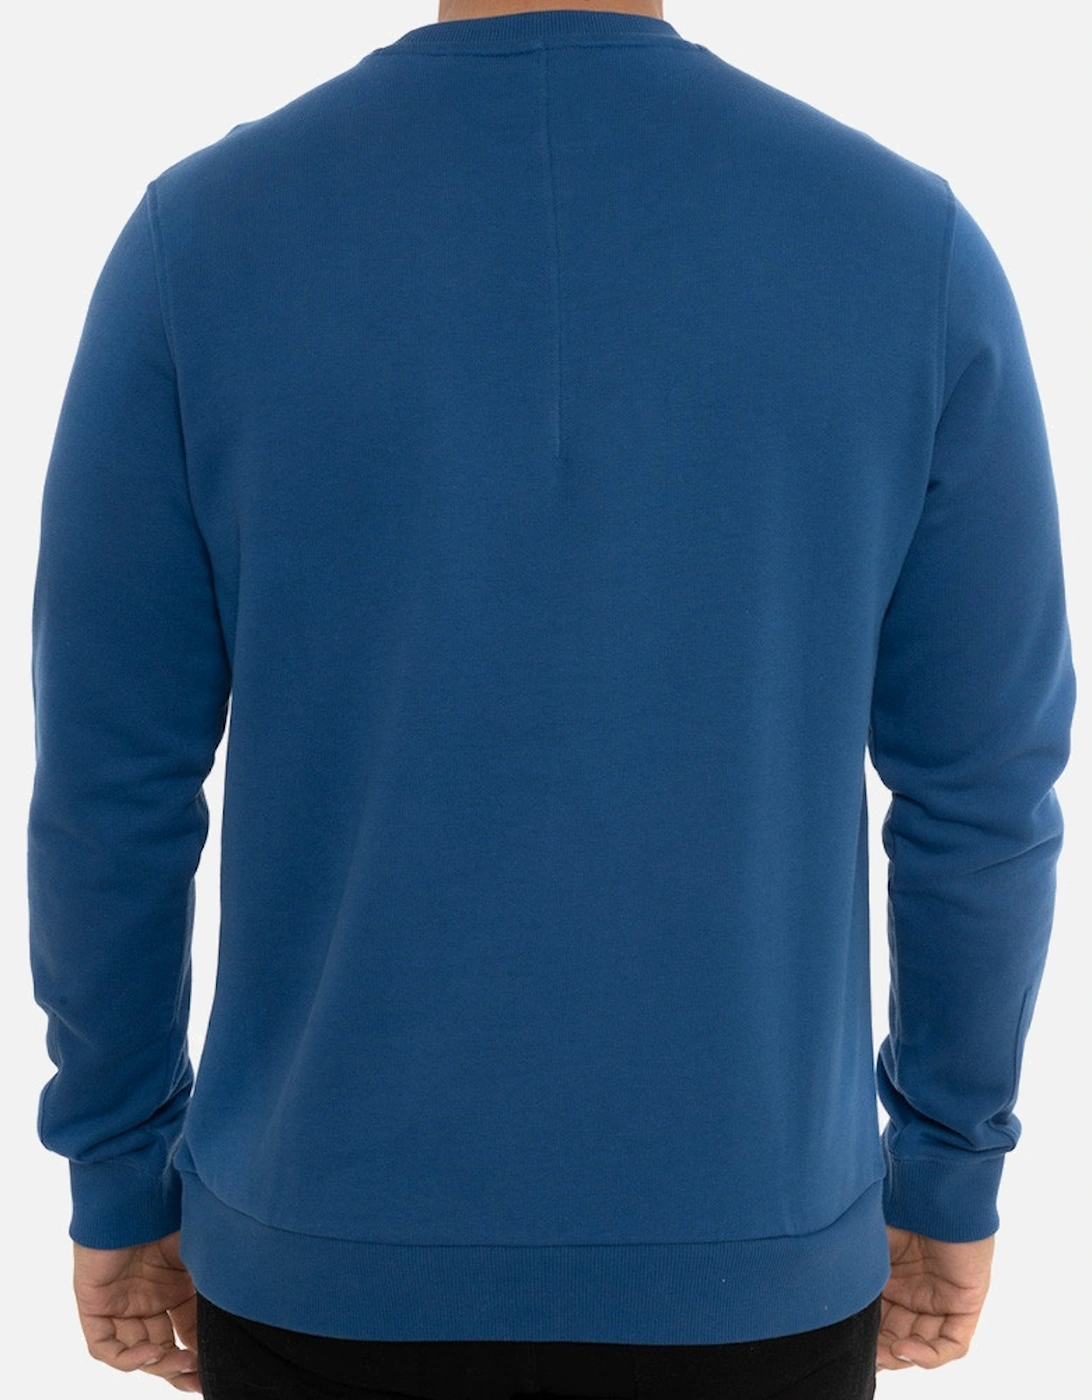 Mens Salbo Iconic Crew Sweatshirt (Royal Blue)